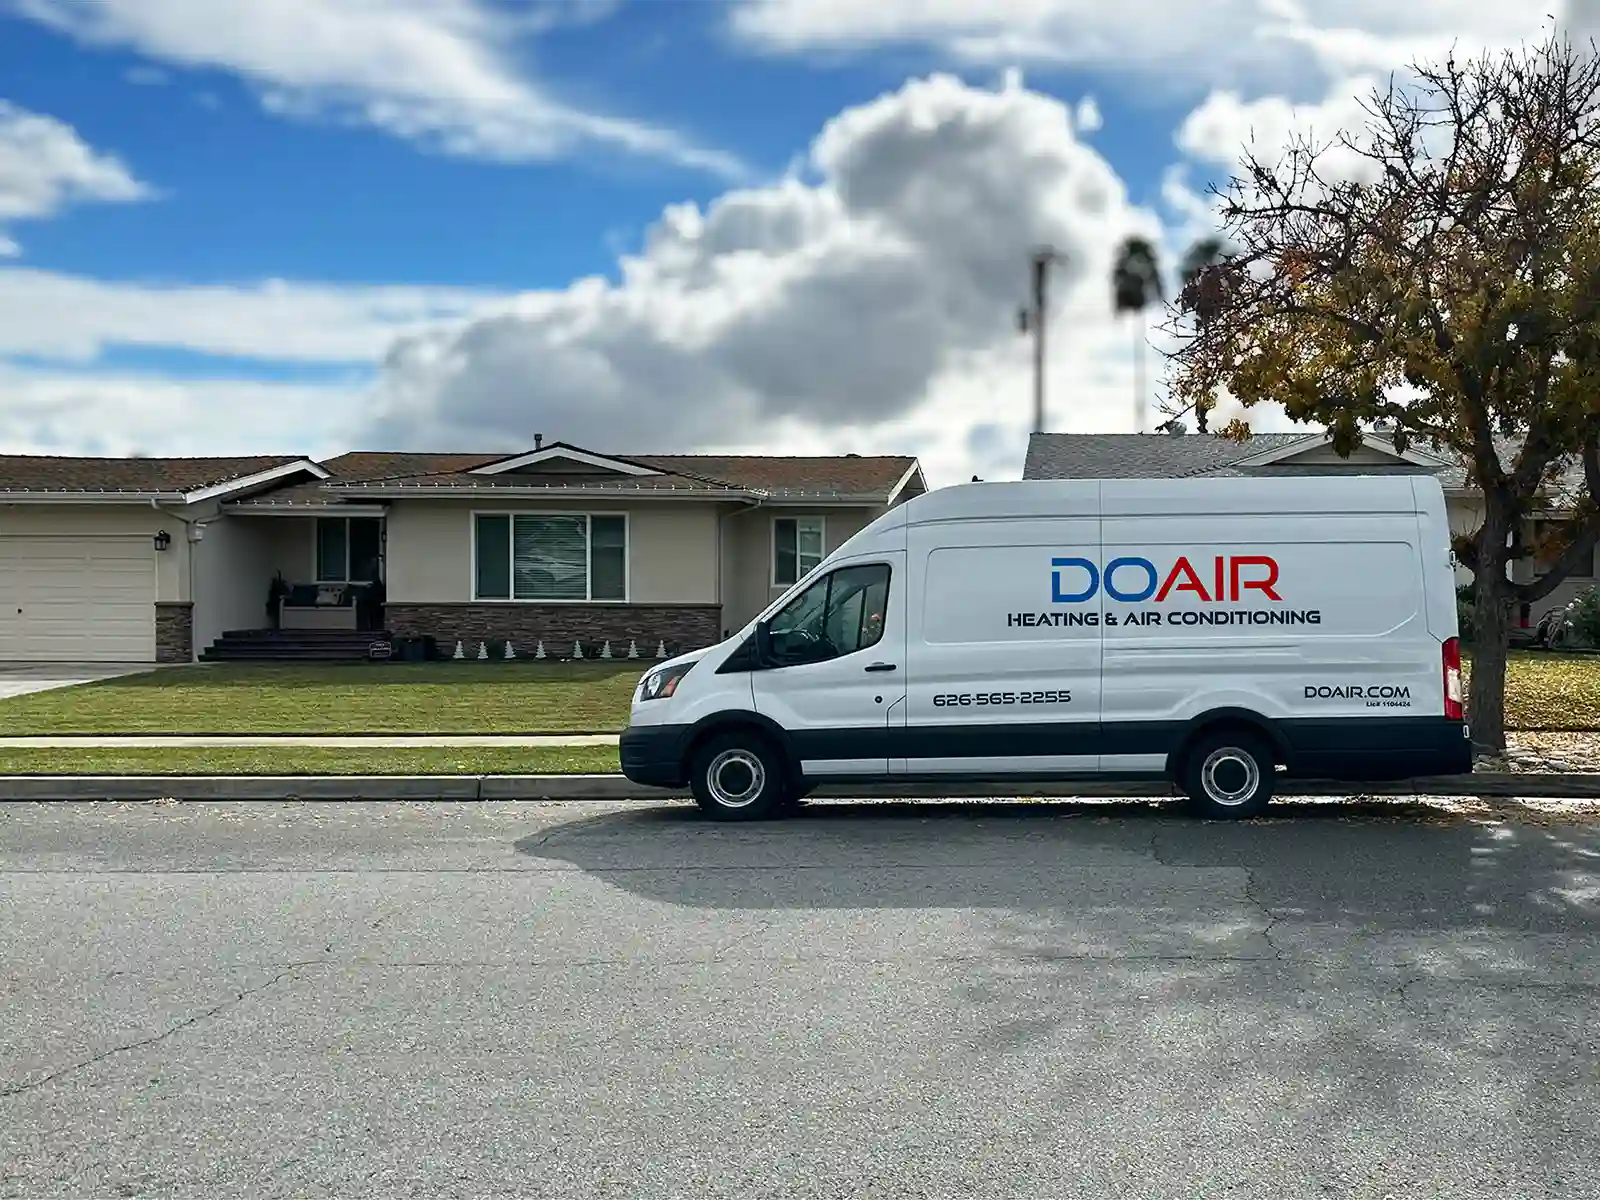 DOAIR Inc. Furgoneta de servicio HVAC aparcada en una obra del sur de California.